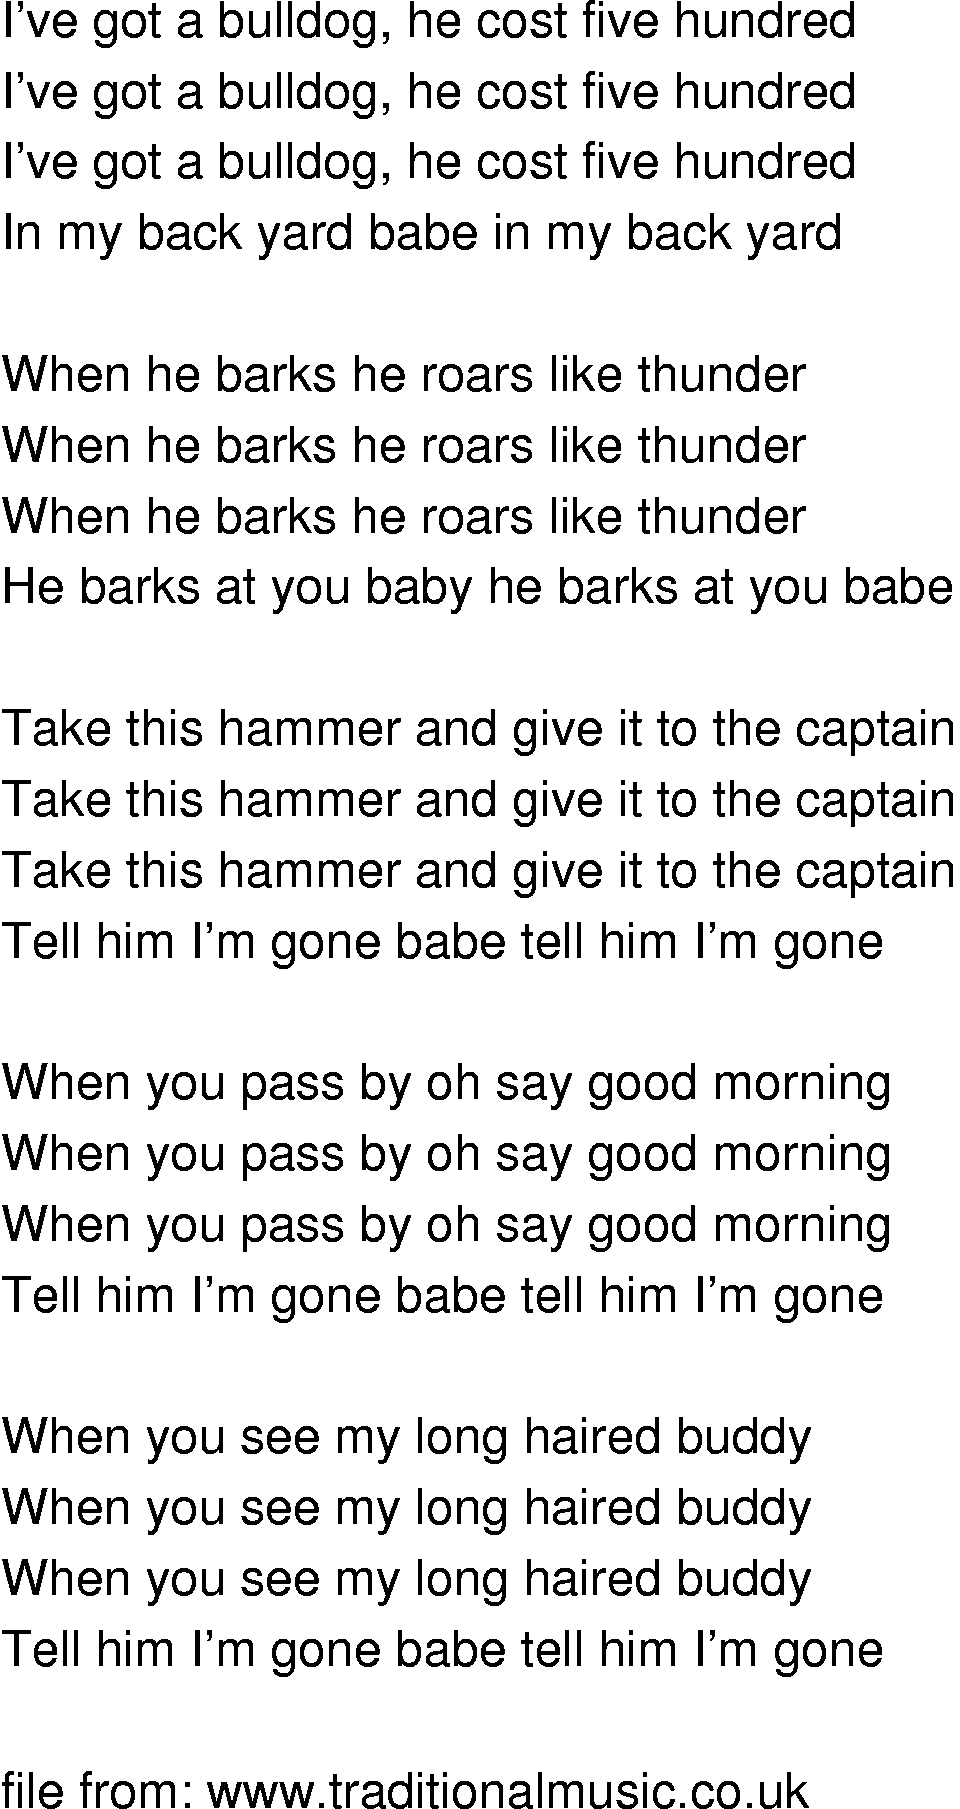 Old-Time (oldtimey) Song Lyrics - i got a bulldog sweet brothers 